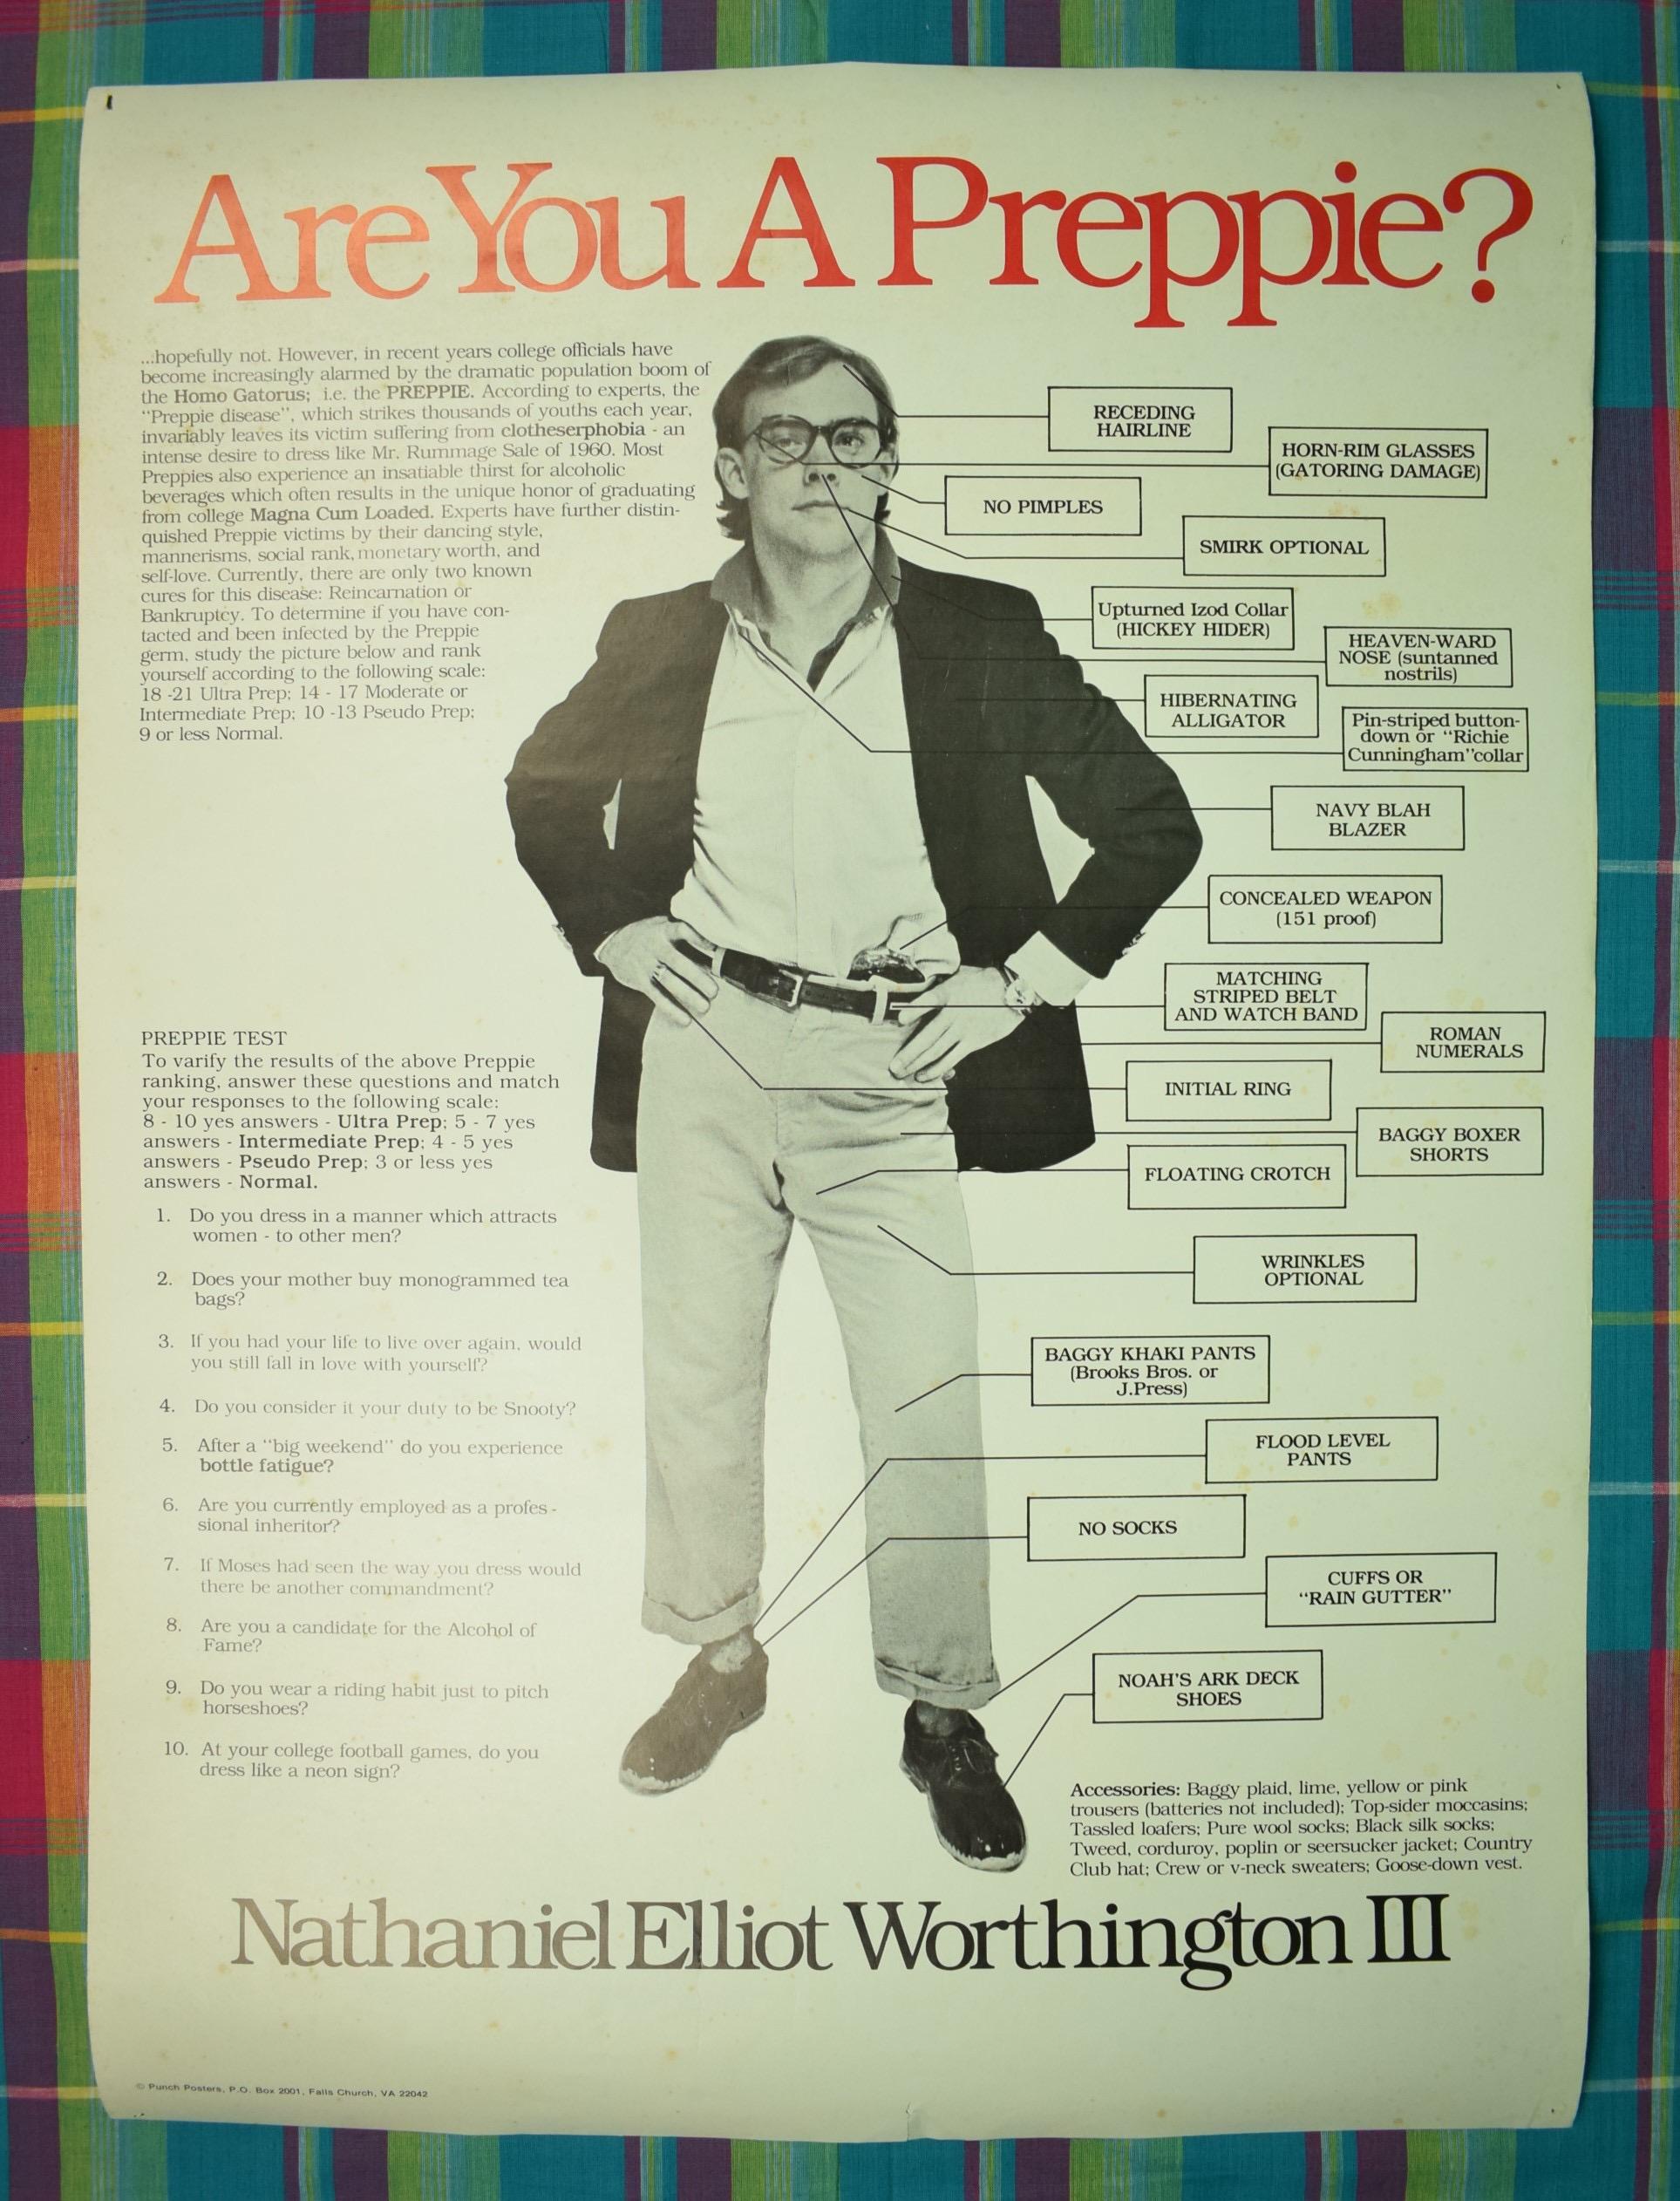 "Are You a Preppie?" Nathaniel Elliot Worthington III c1979 Poster (NOS) - Print by Tom Shadyac